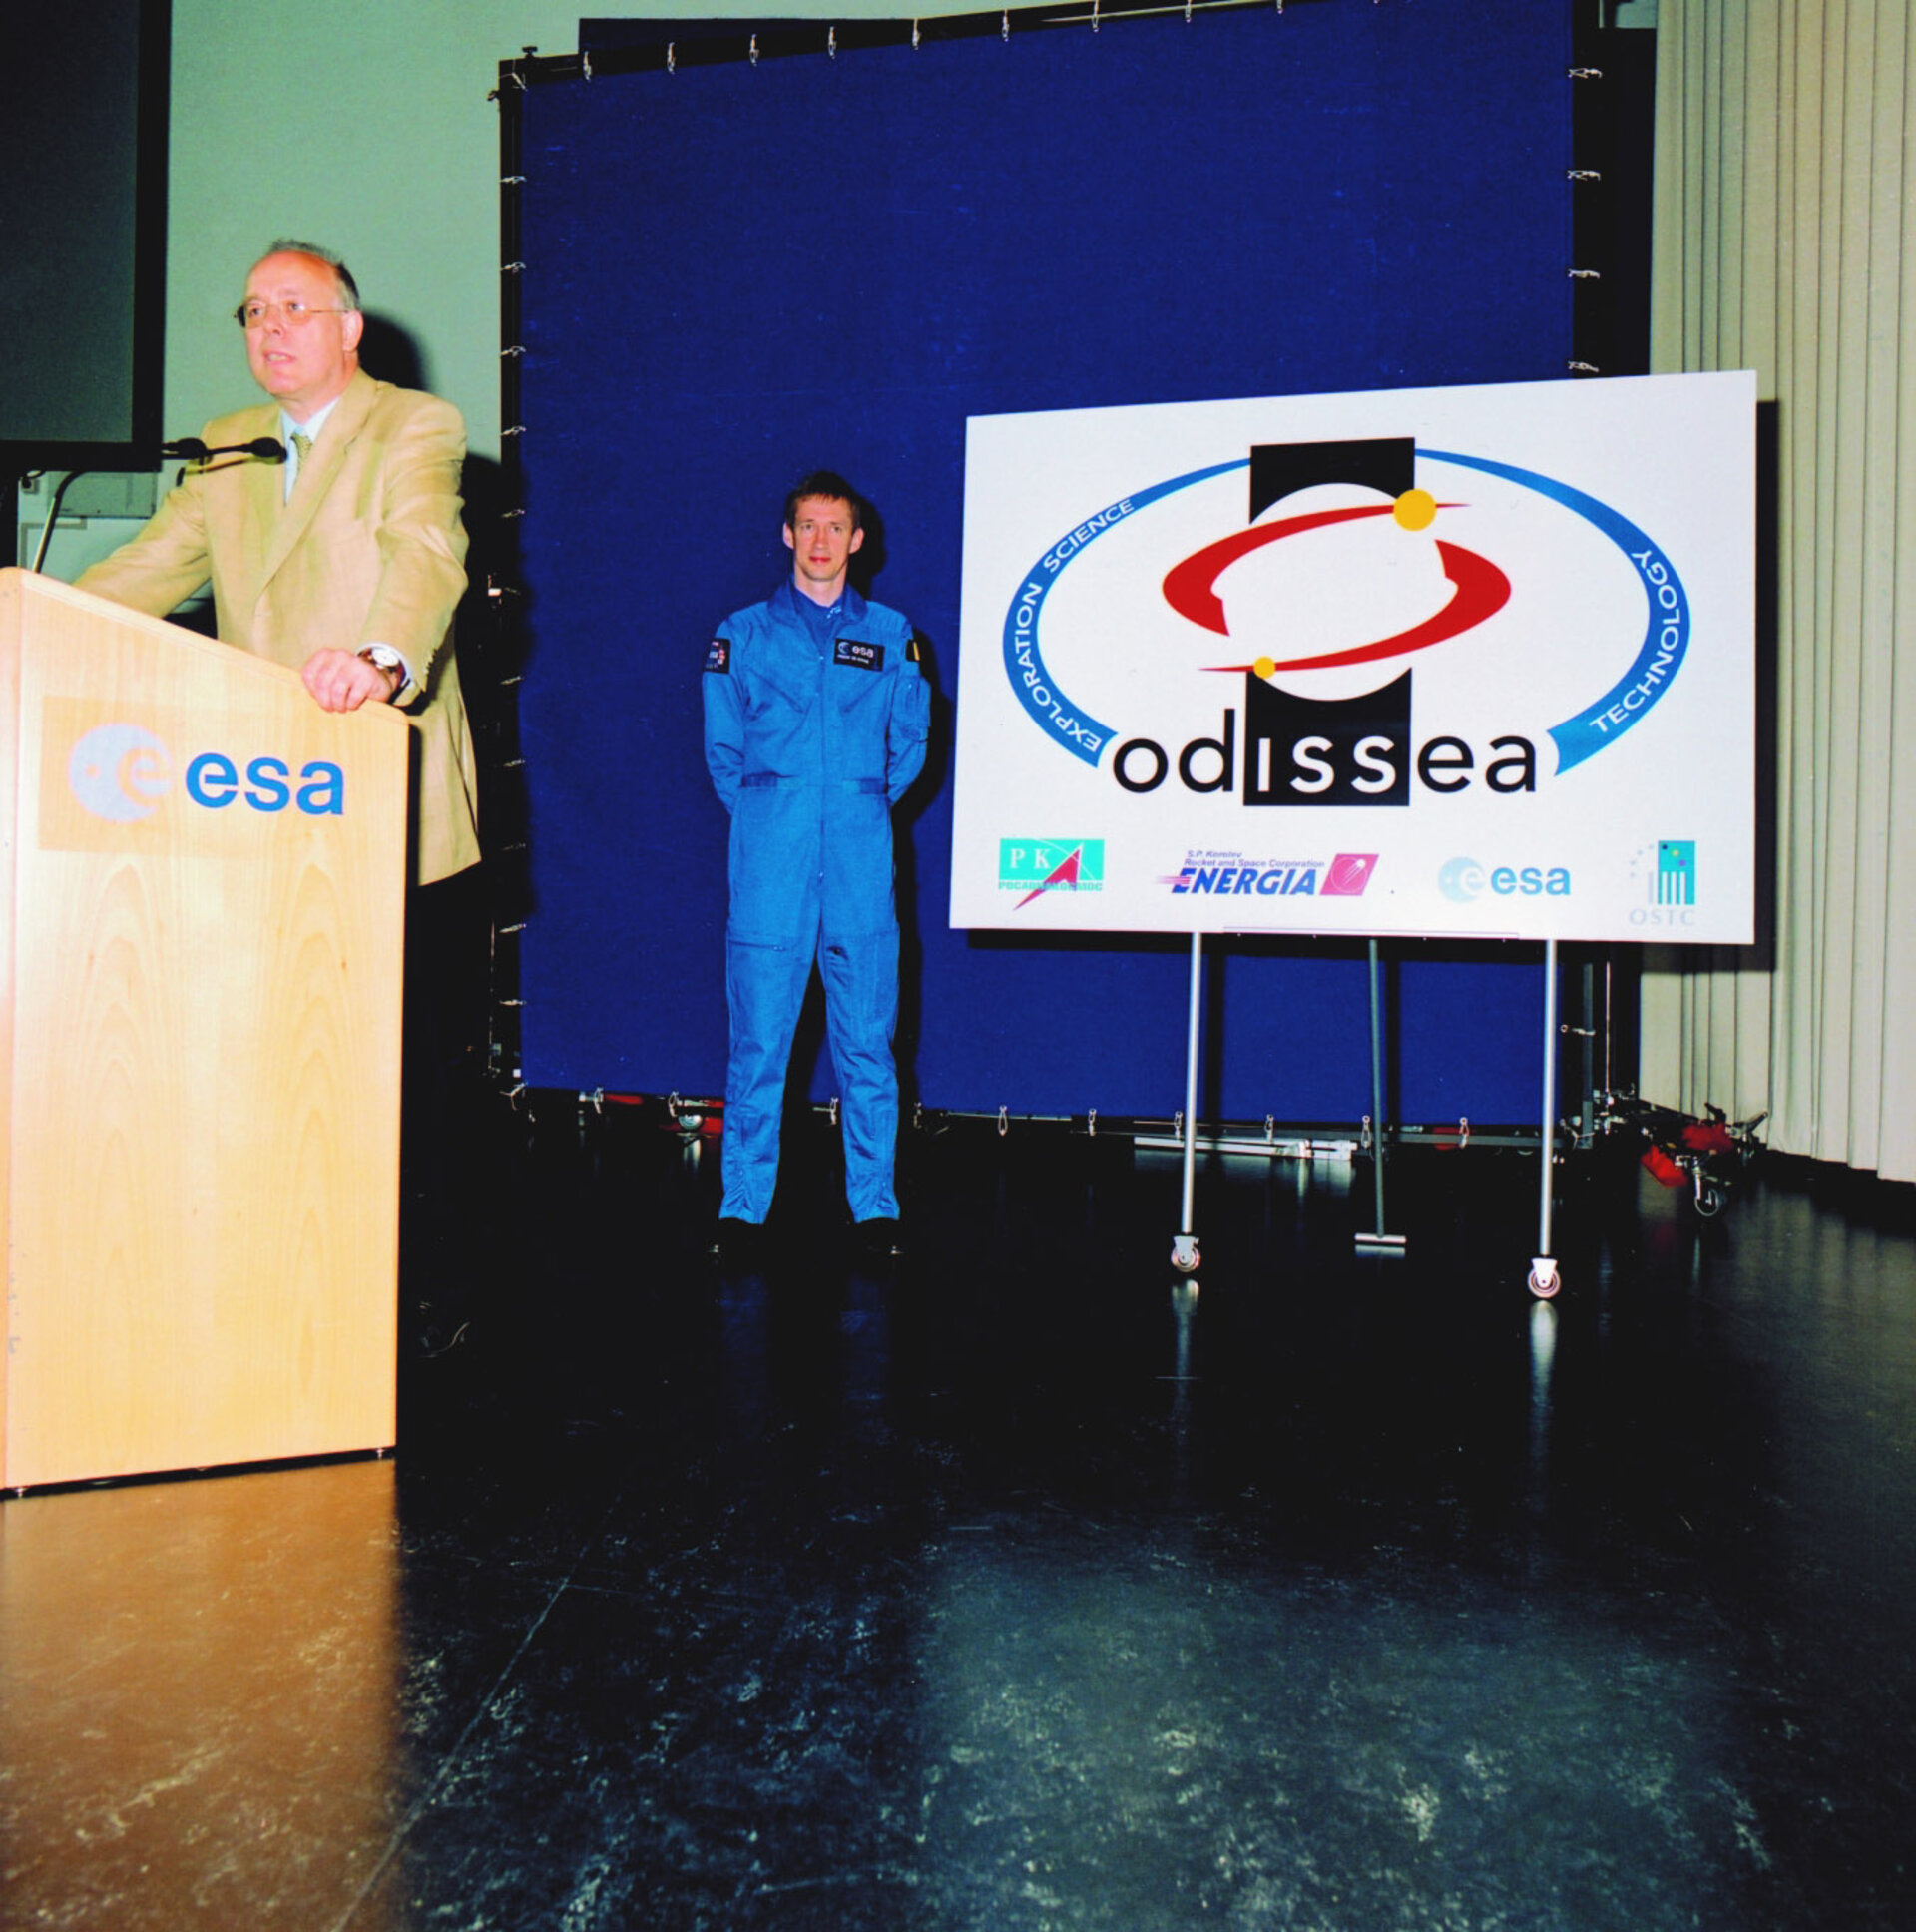 Presentation Odissea mission and logo